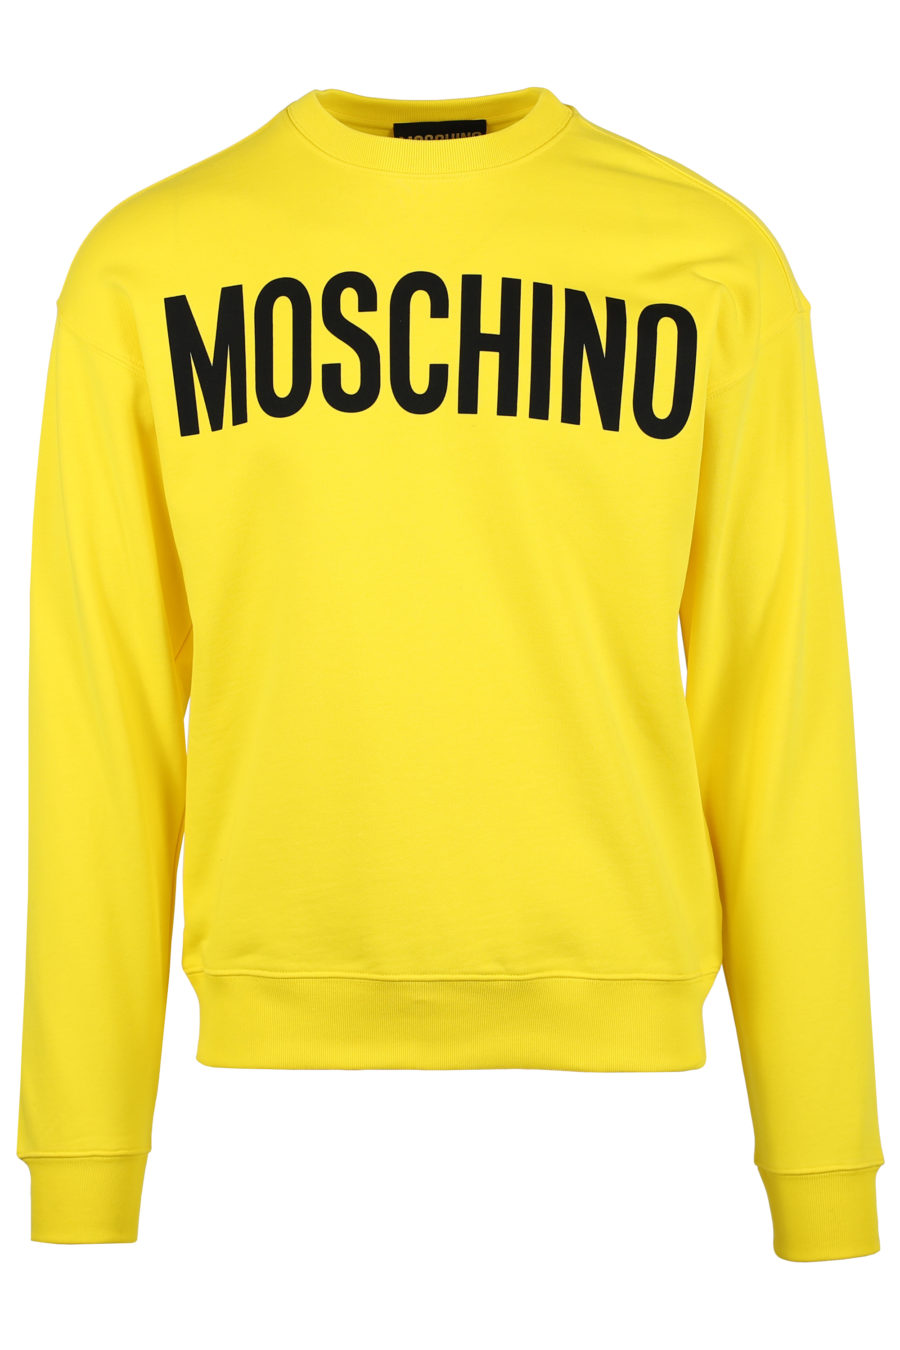 Gelbes Sweatshirt mit großem Logo vorne - IMG 0895 copy